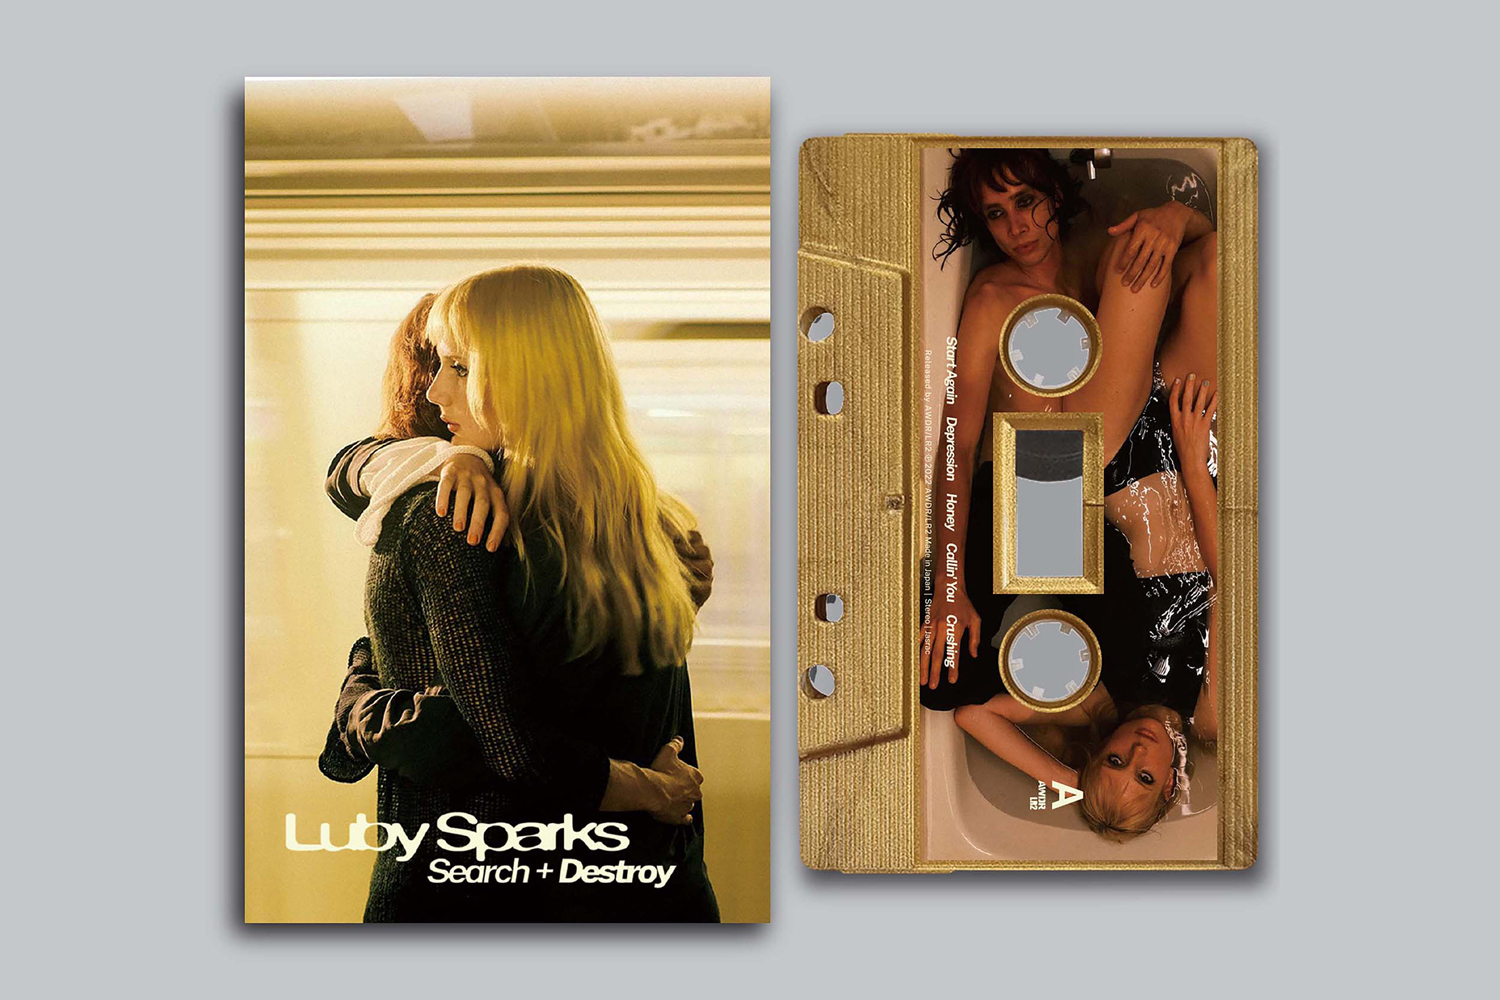 Luby Sparksが『Search + Destroy』のヴァイナル / カセットテープ 